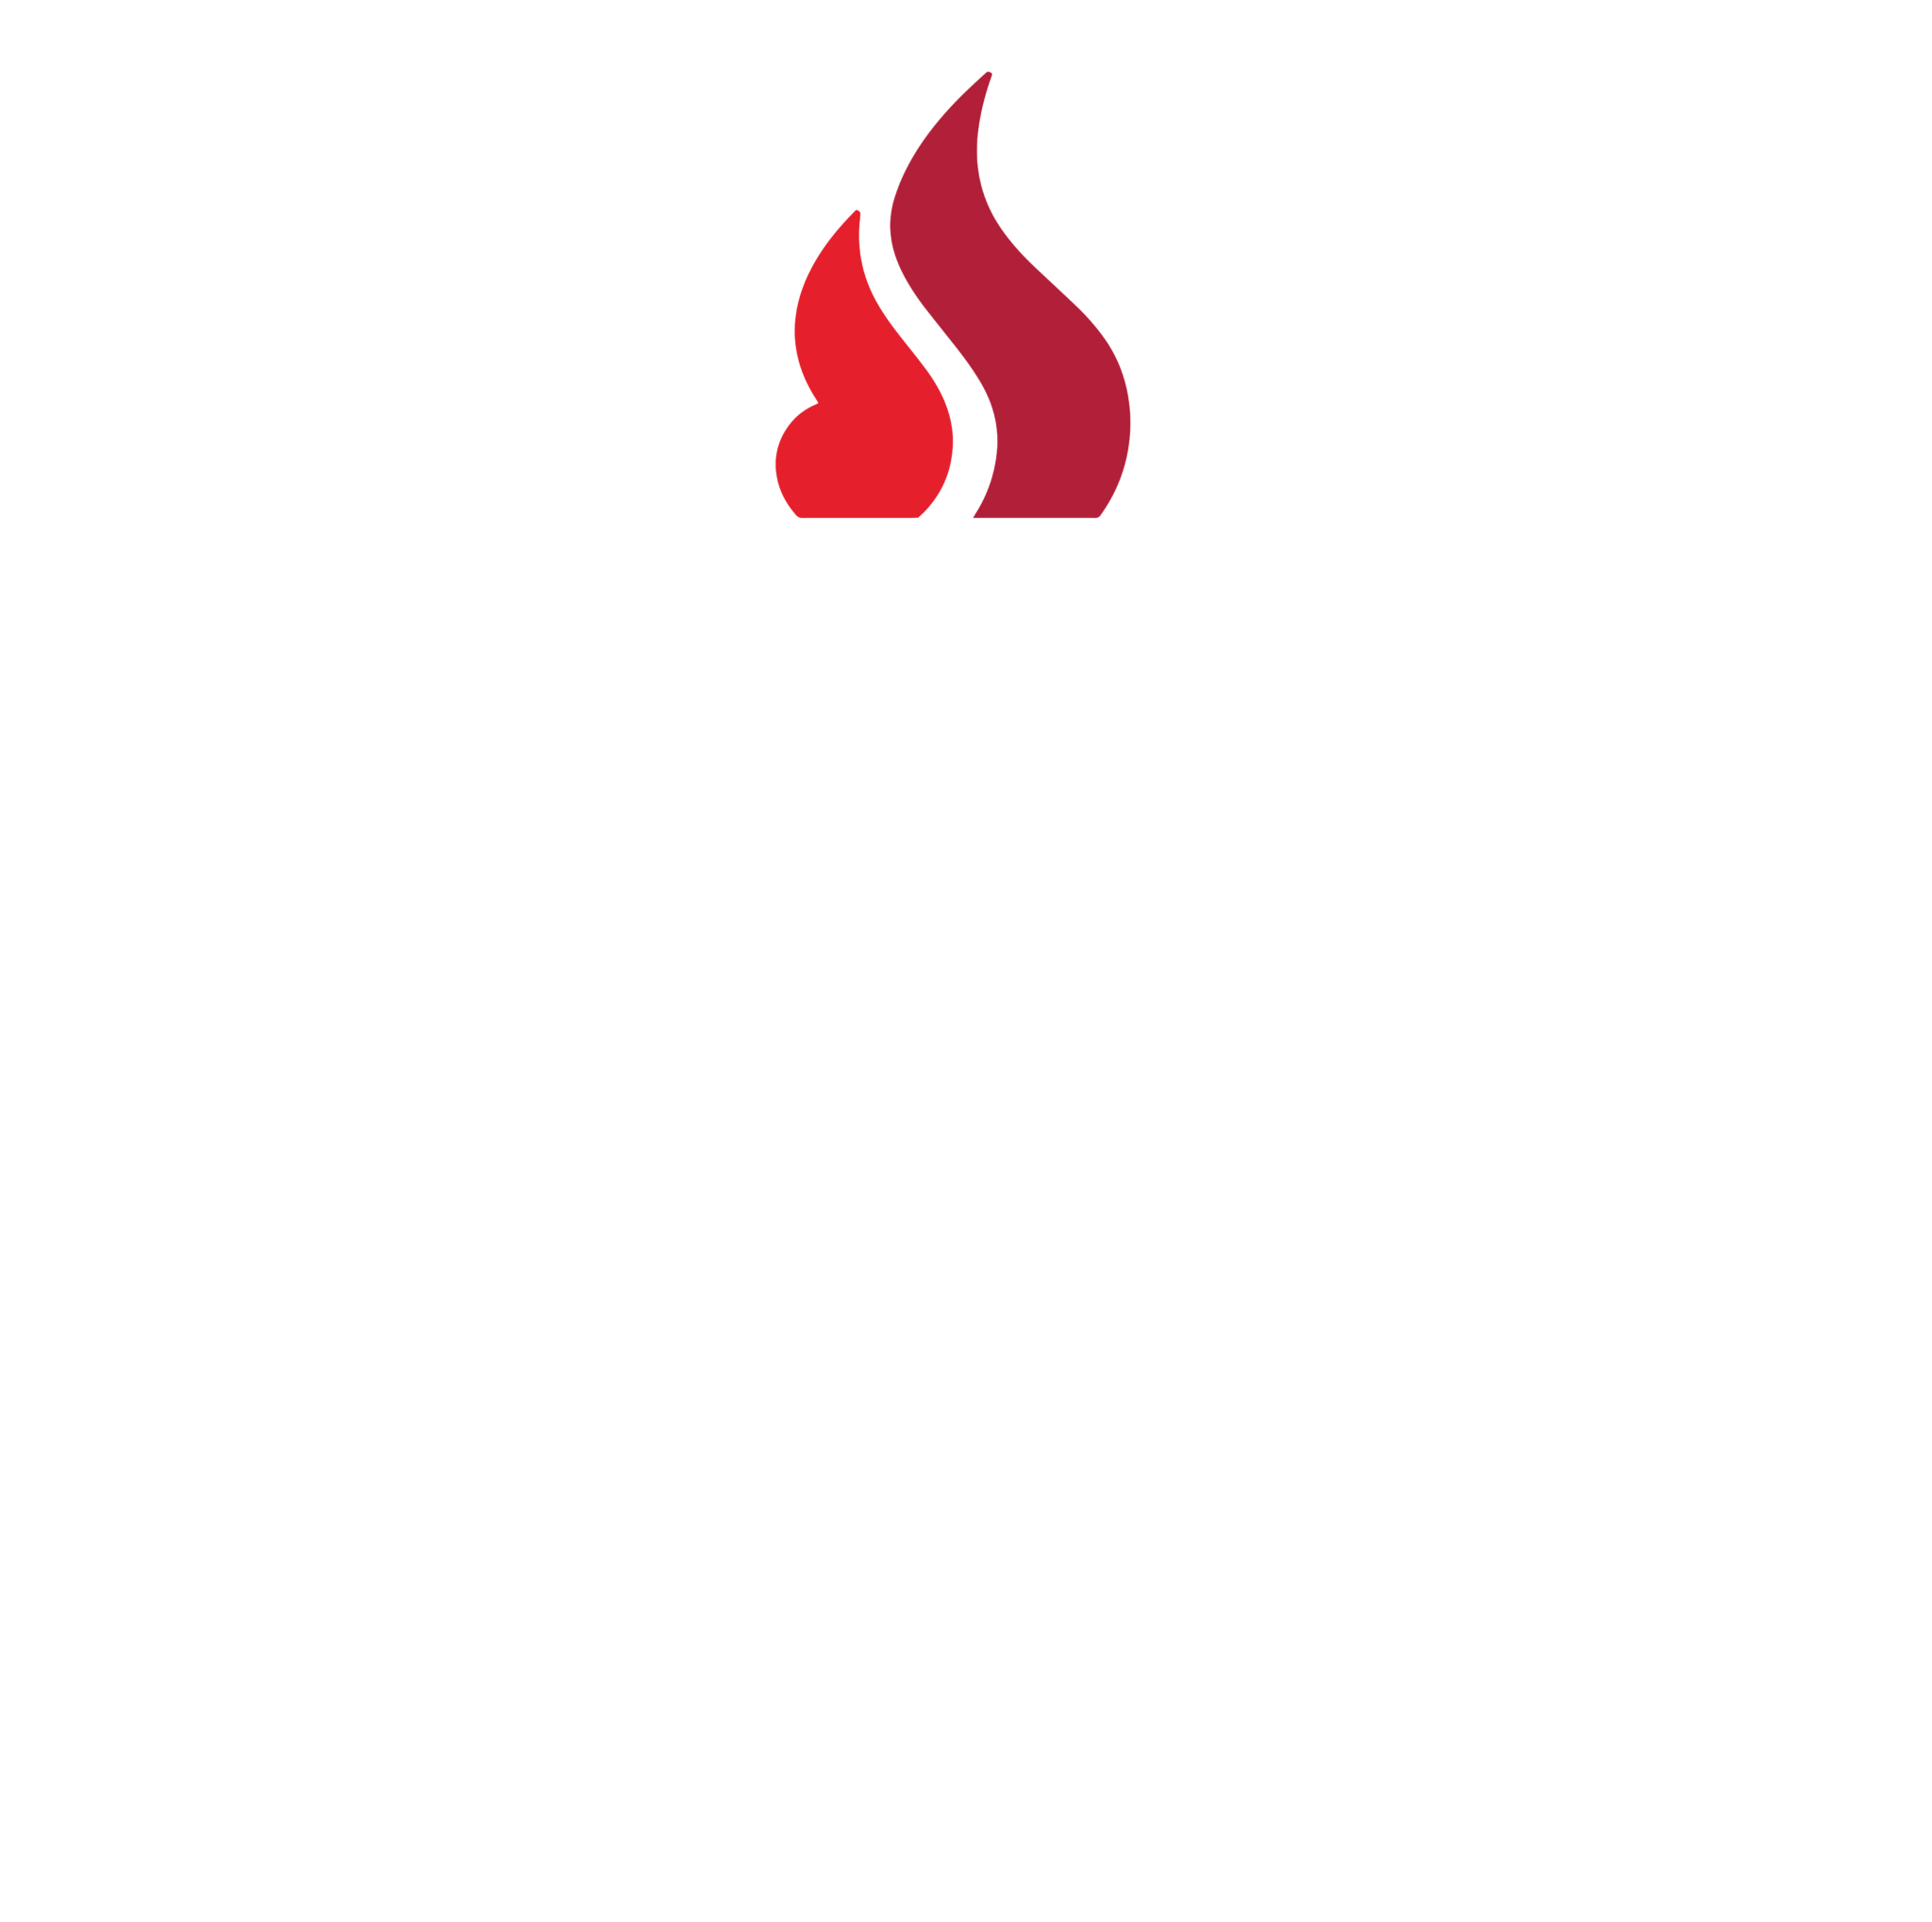 Workforce Development - Trenholm State Community College